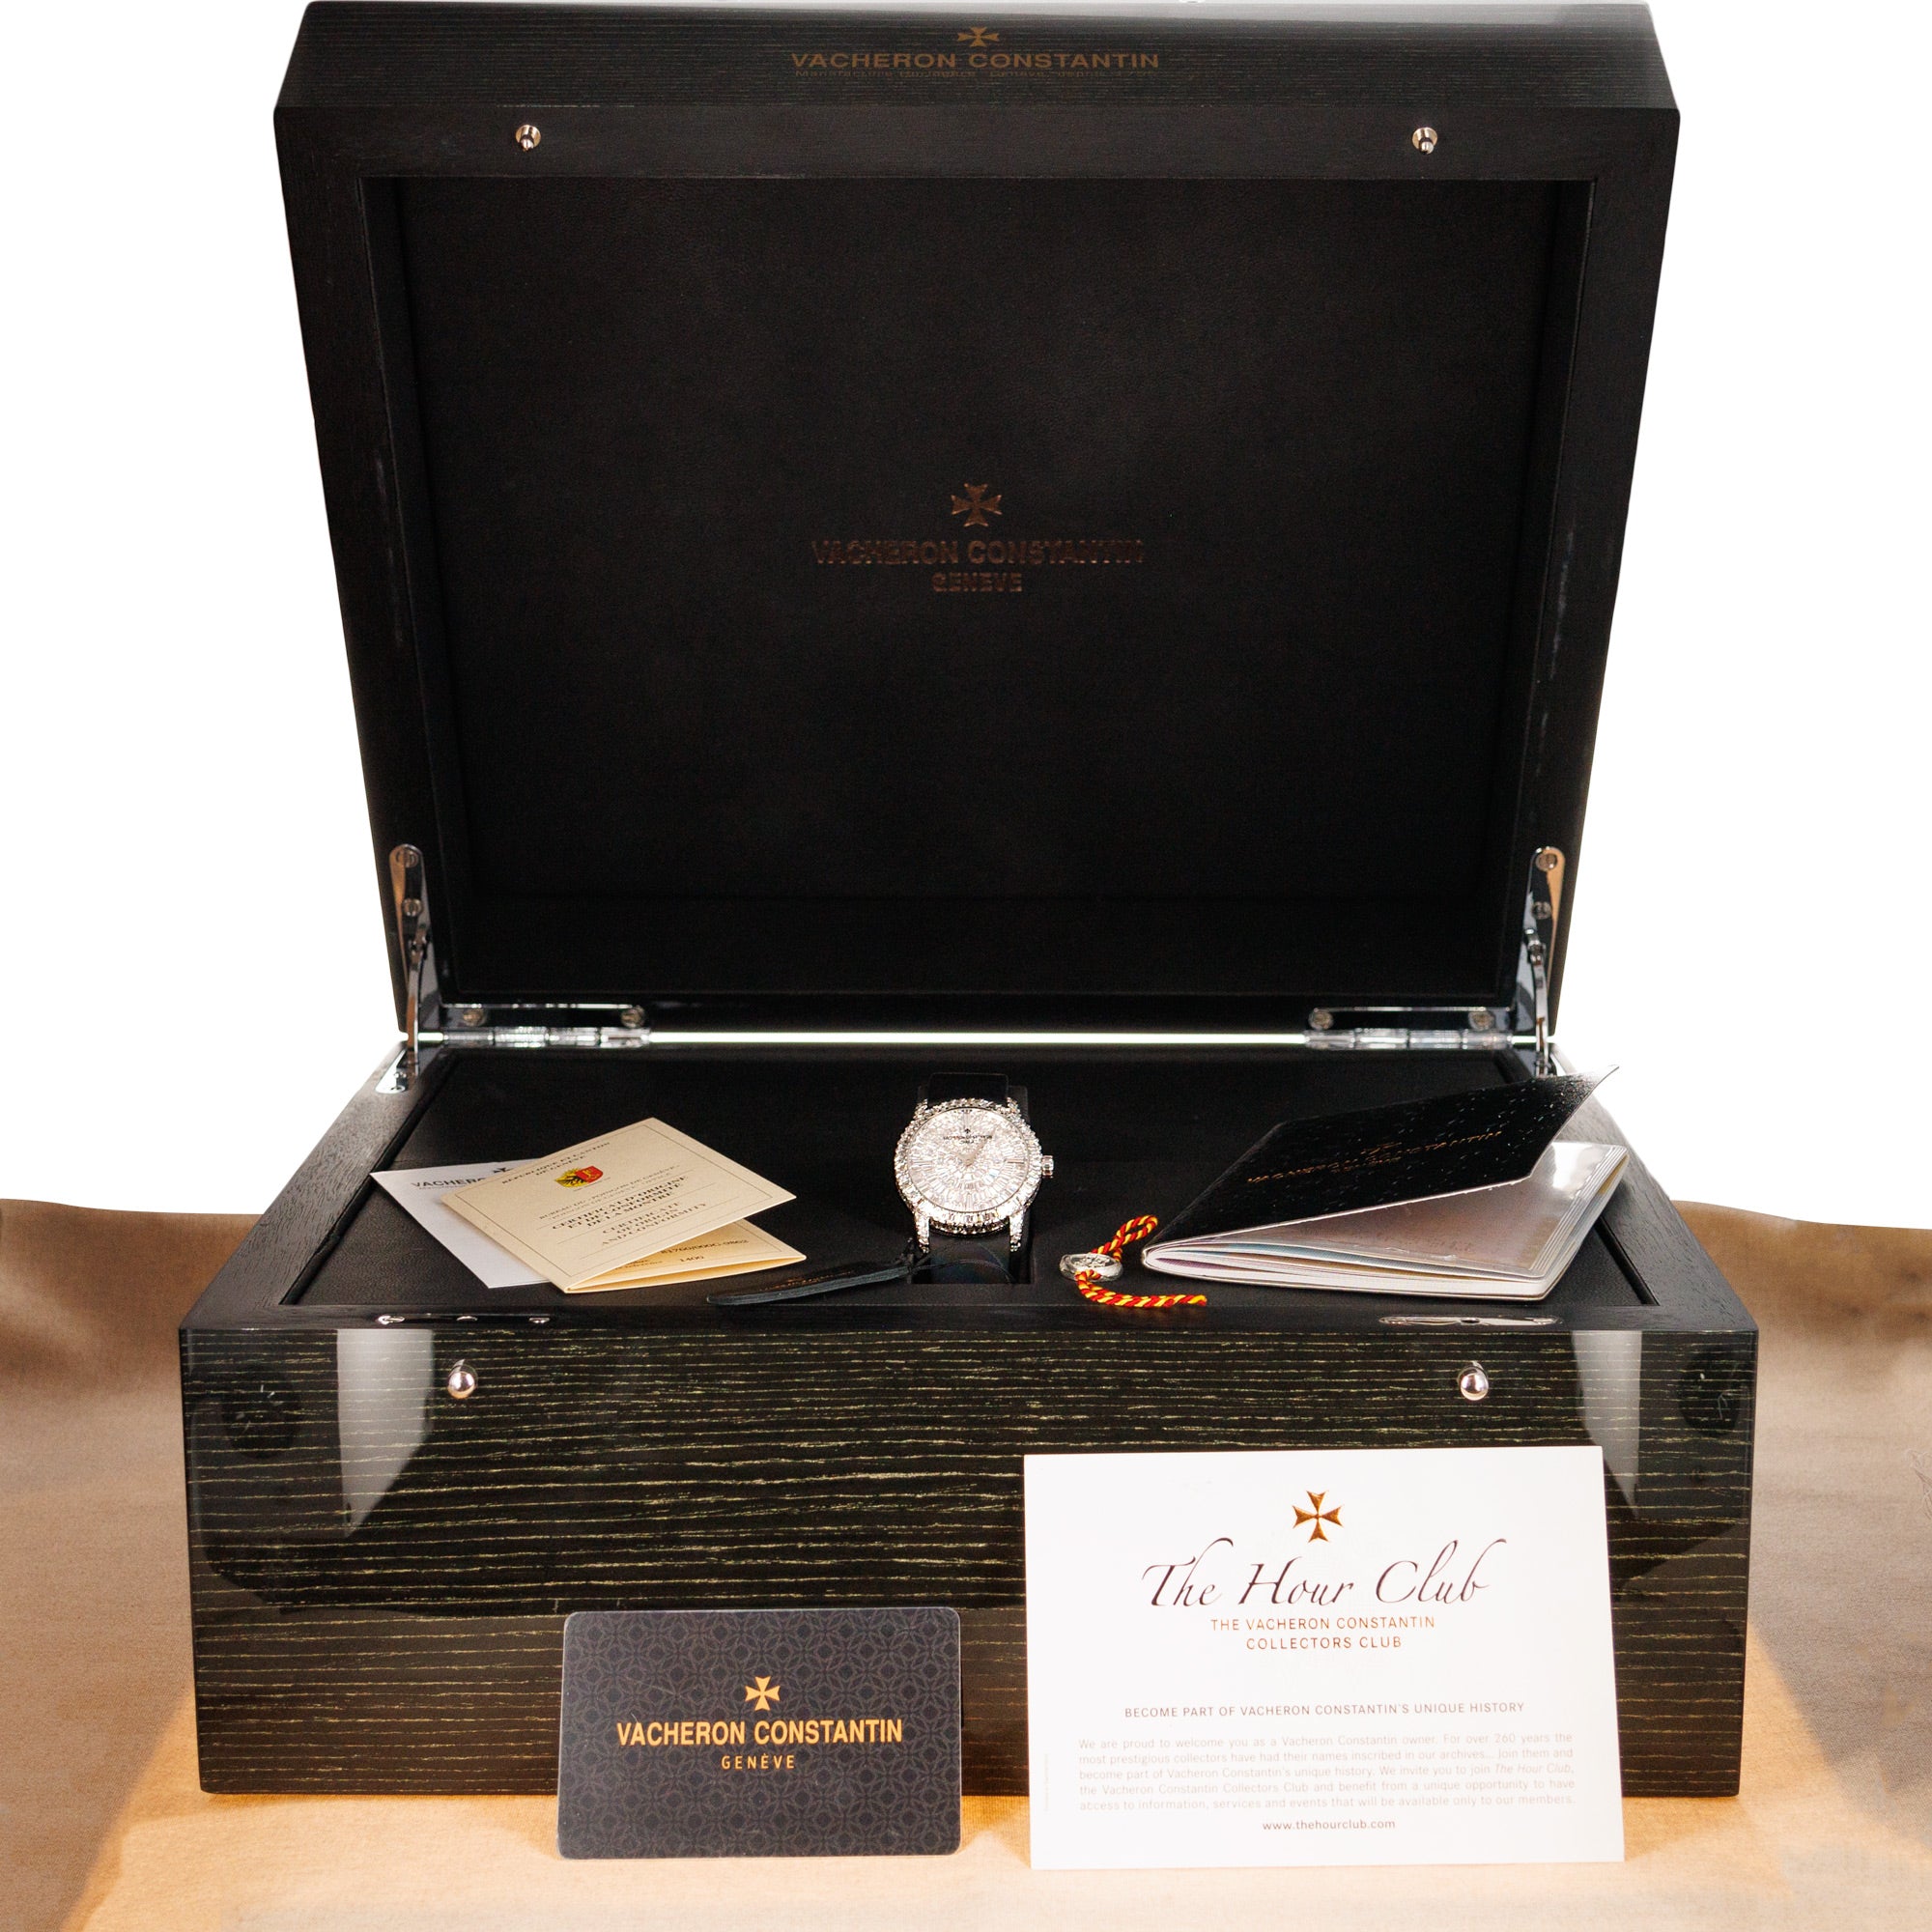 Vacheron Constantin - Vacheron Constantin White Gold Traditionnelle High Jewellery Watch Ref. 81760 - The Keystone Watches